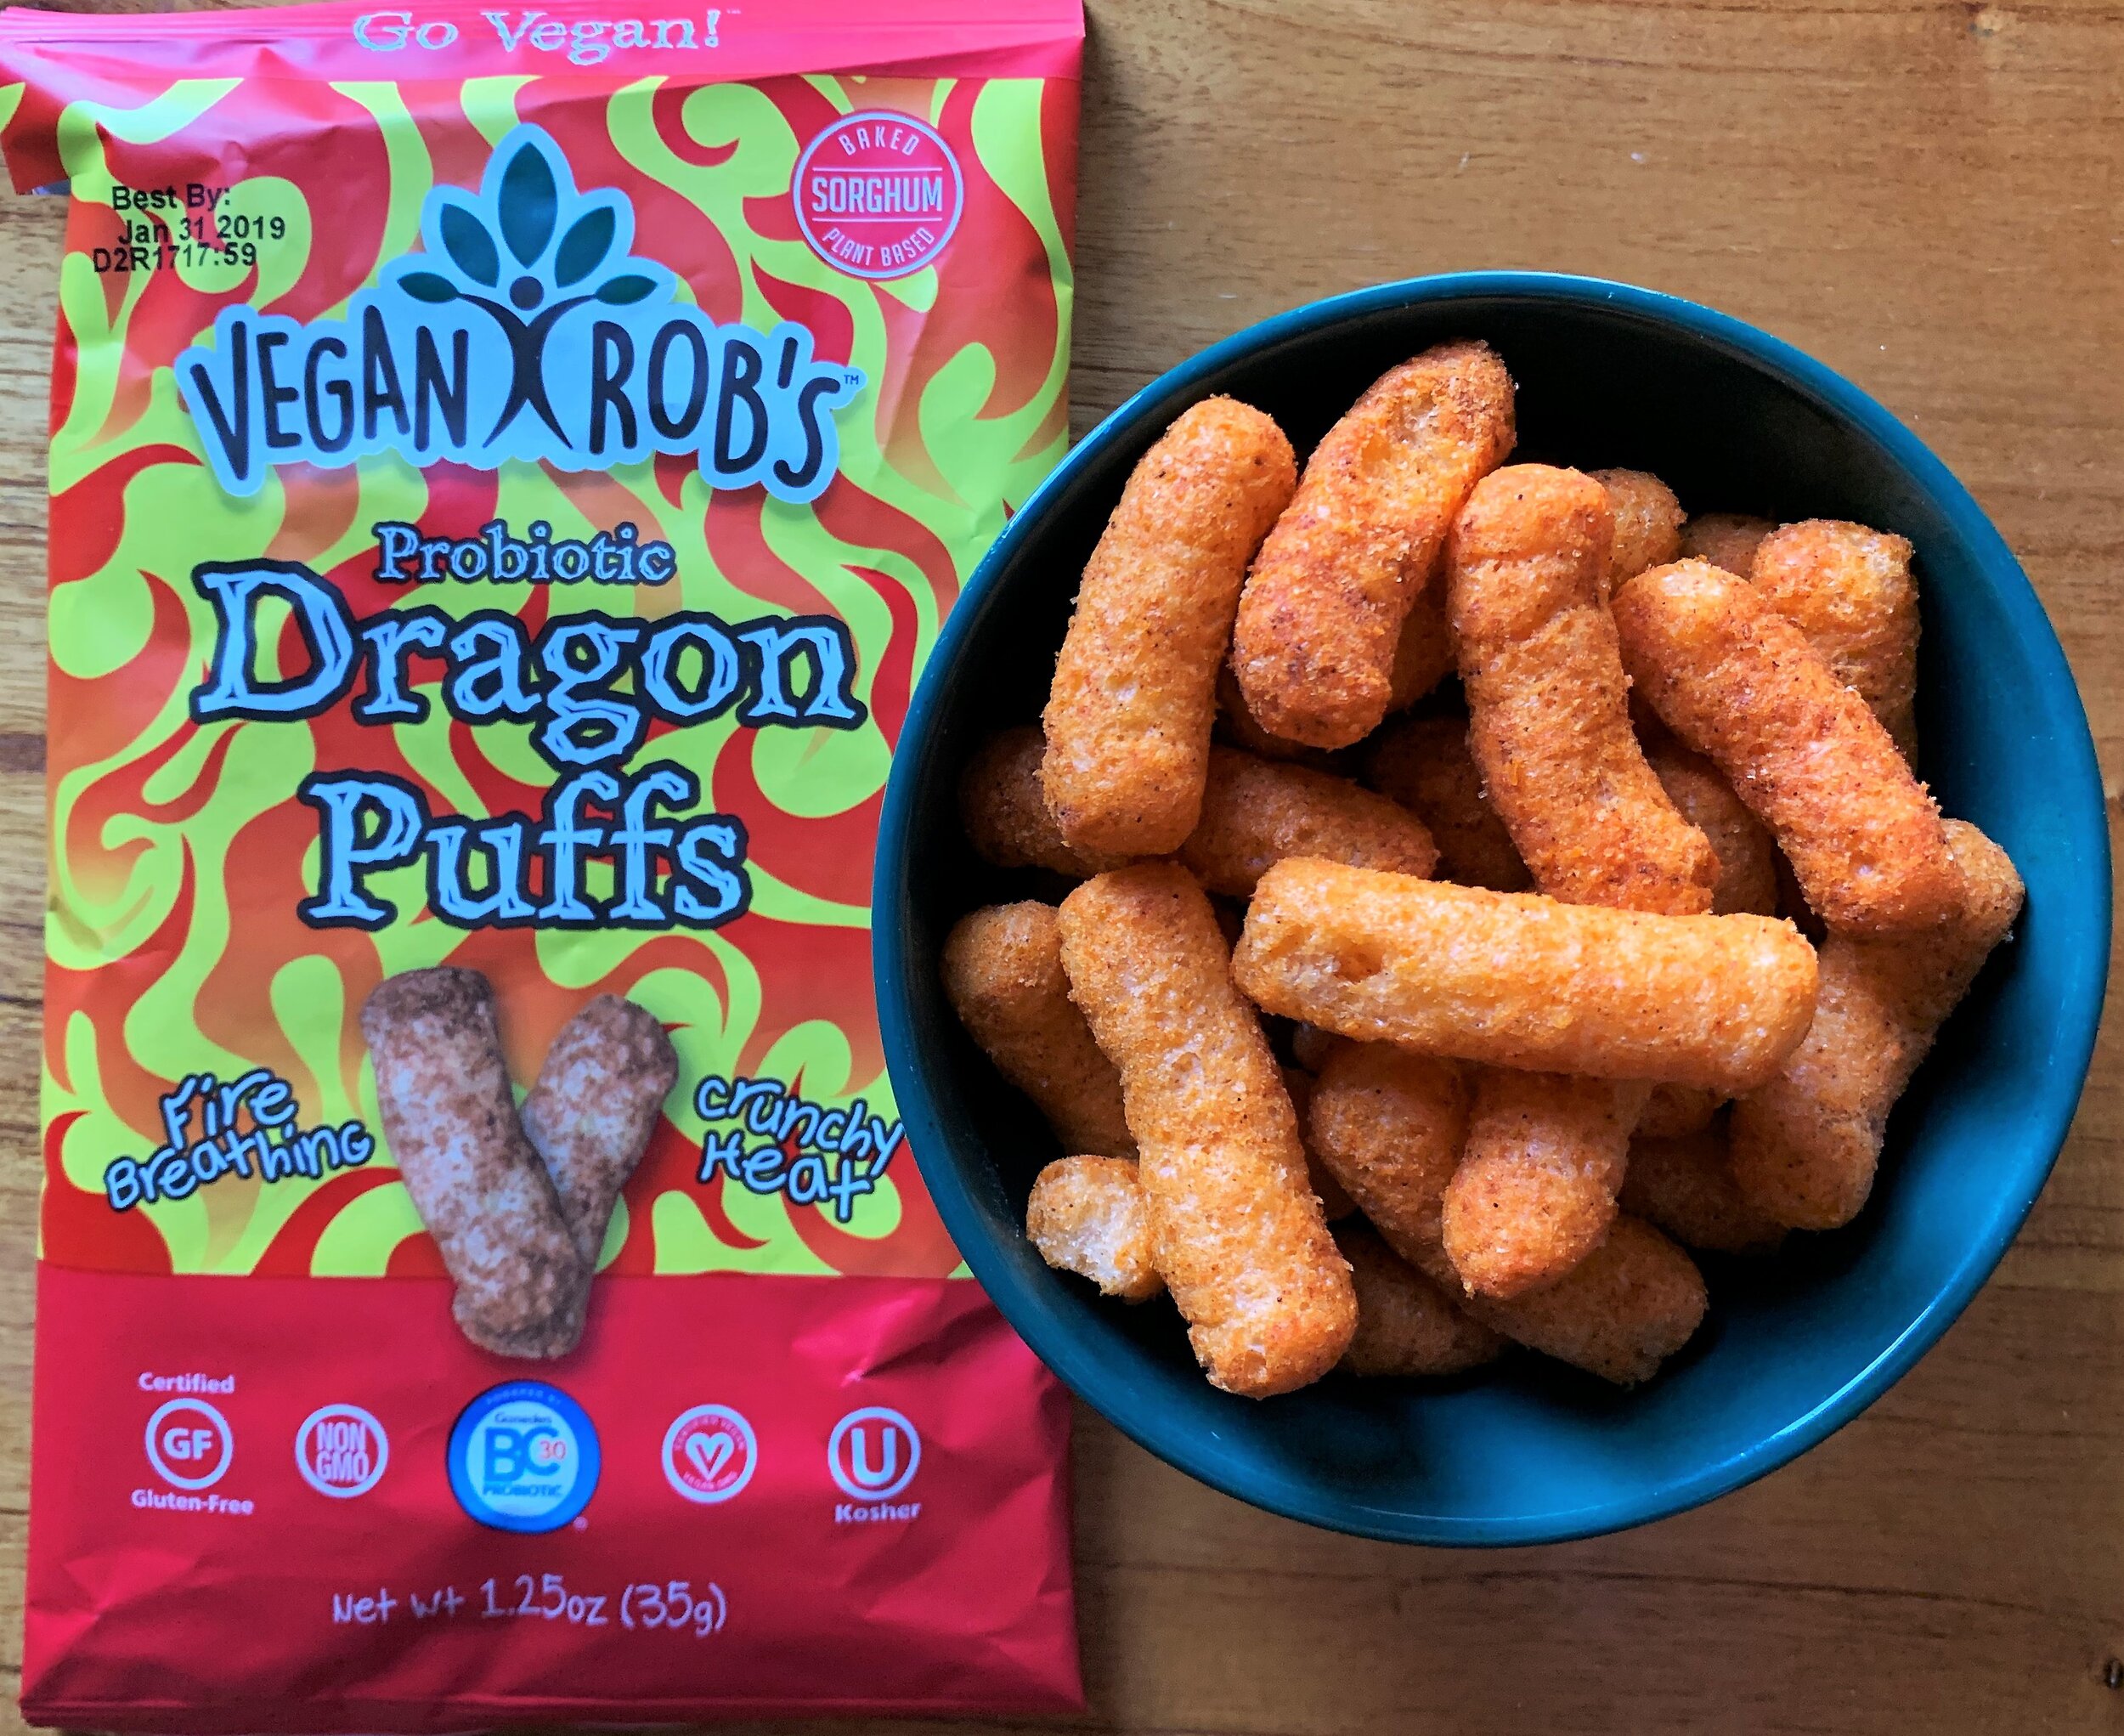 Dragon Puff snacks from Vegan Robs